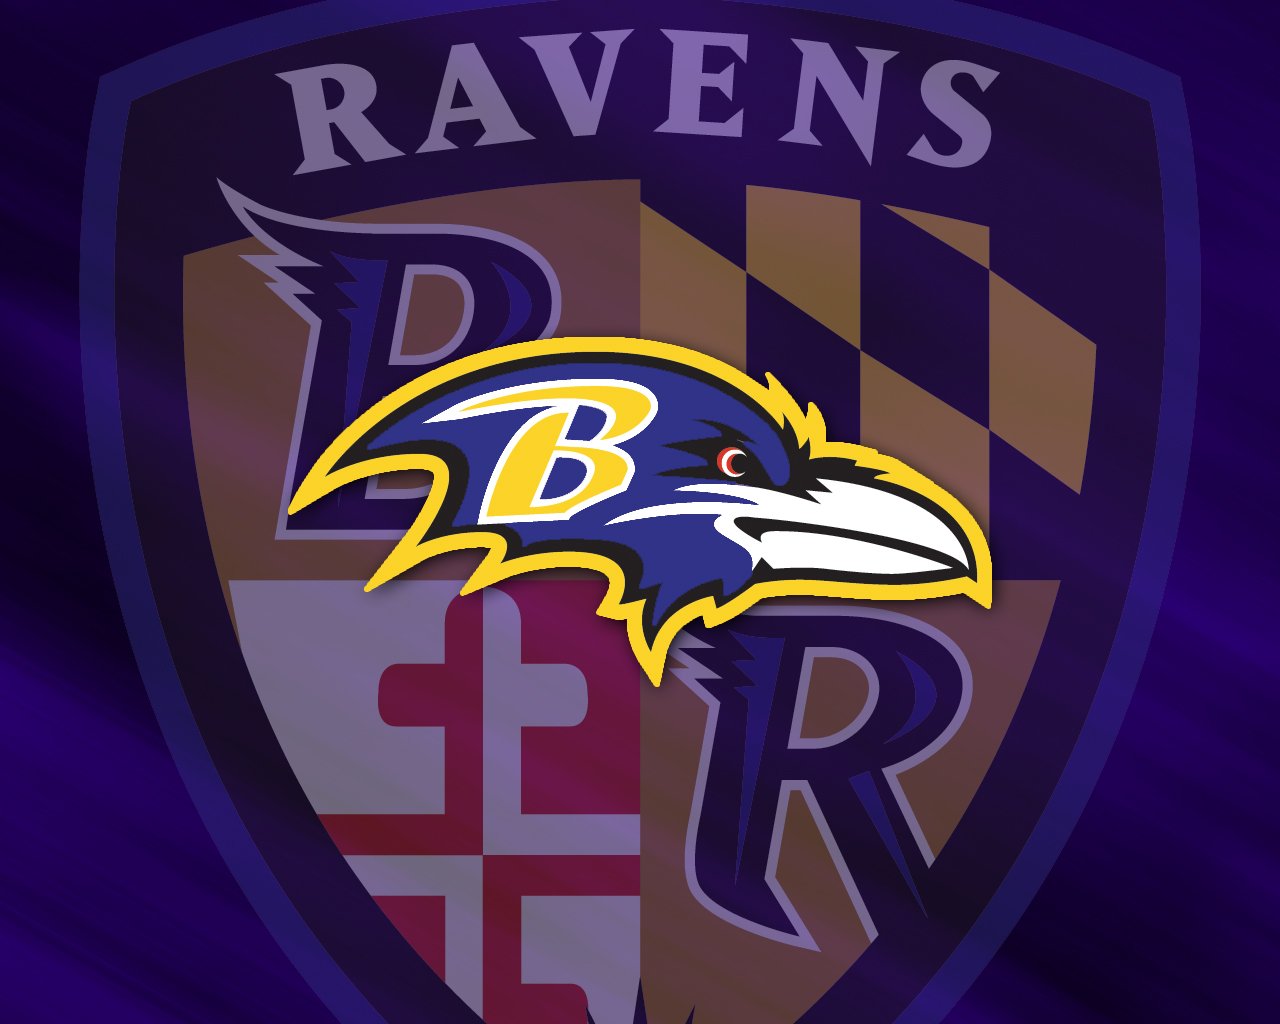 Baltimore Ravens Backgrounds, Compatible - PC, Mobile, Gadgets| 1280x1024 px